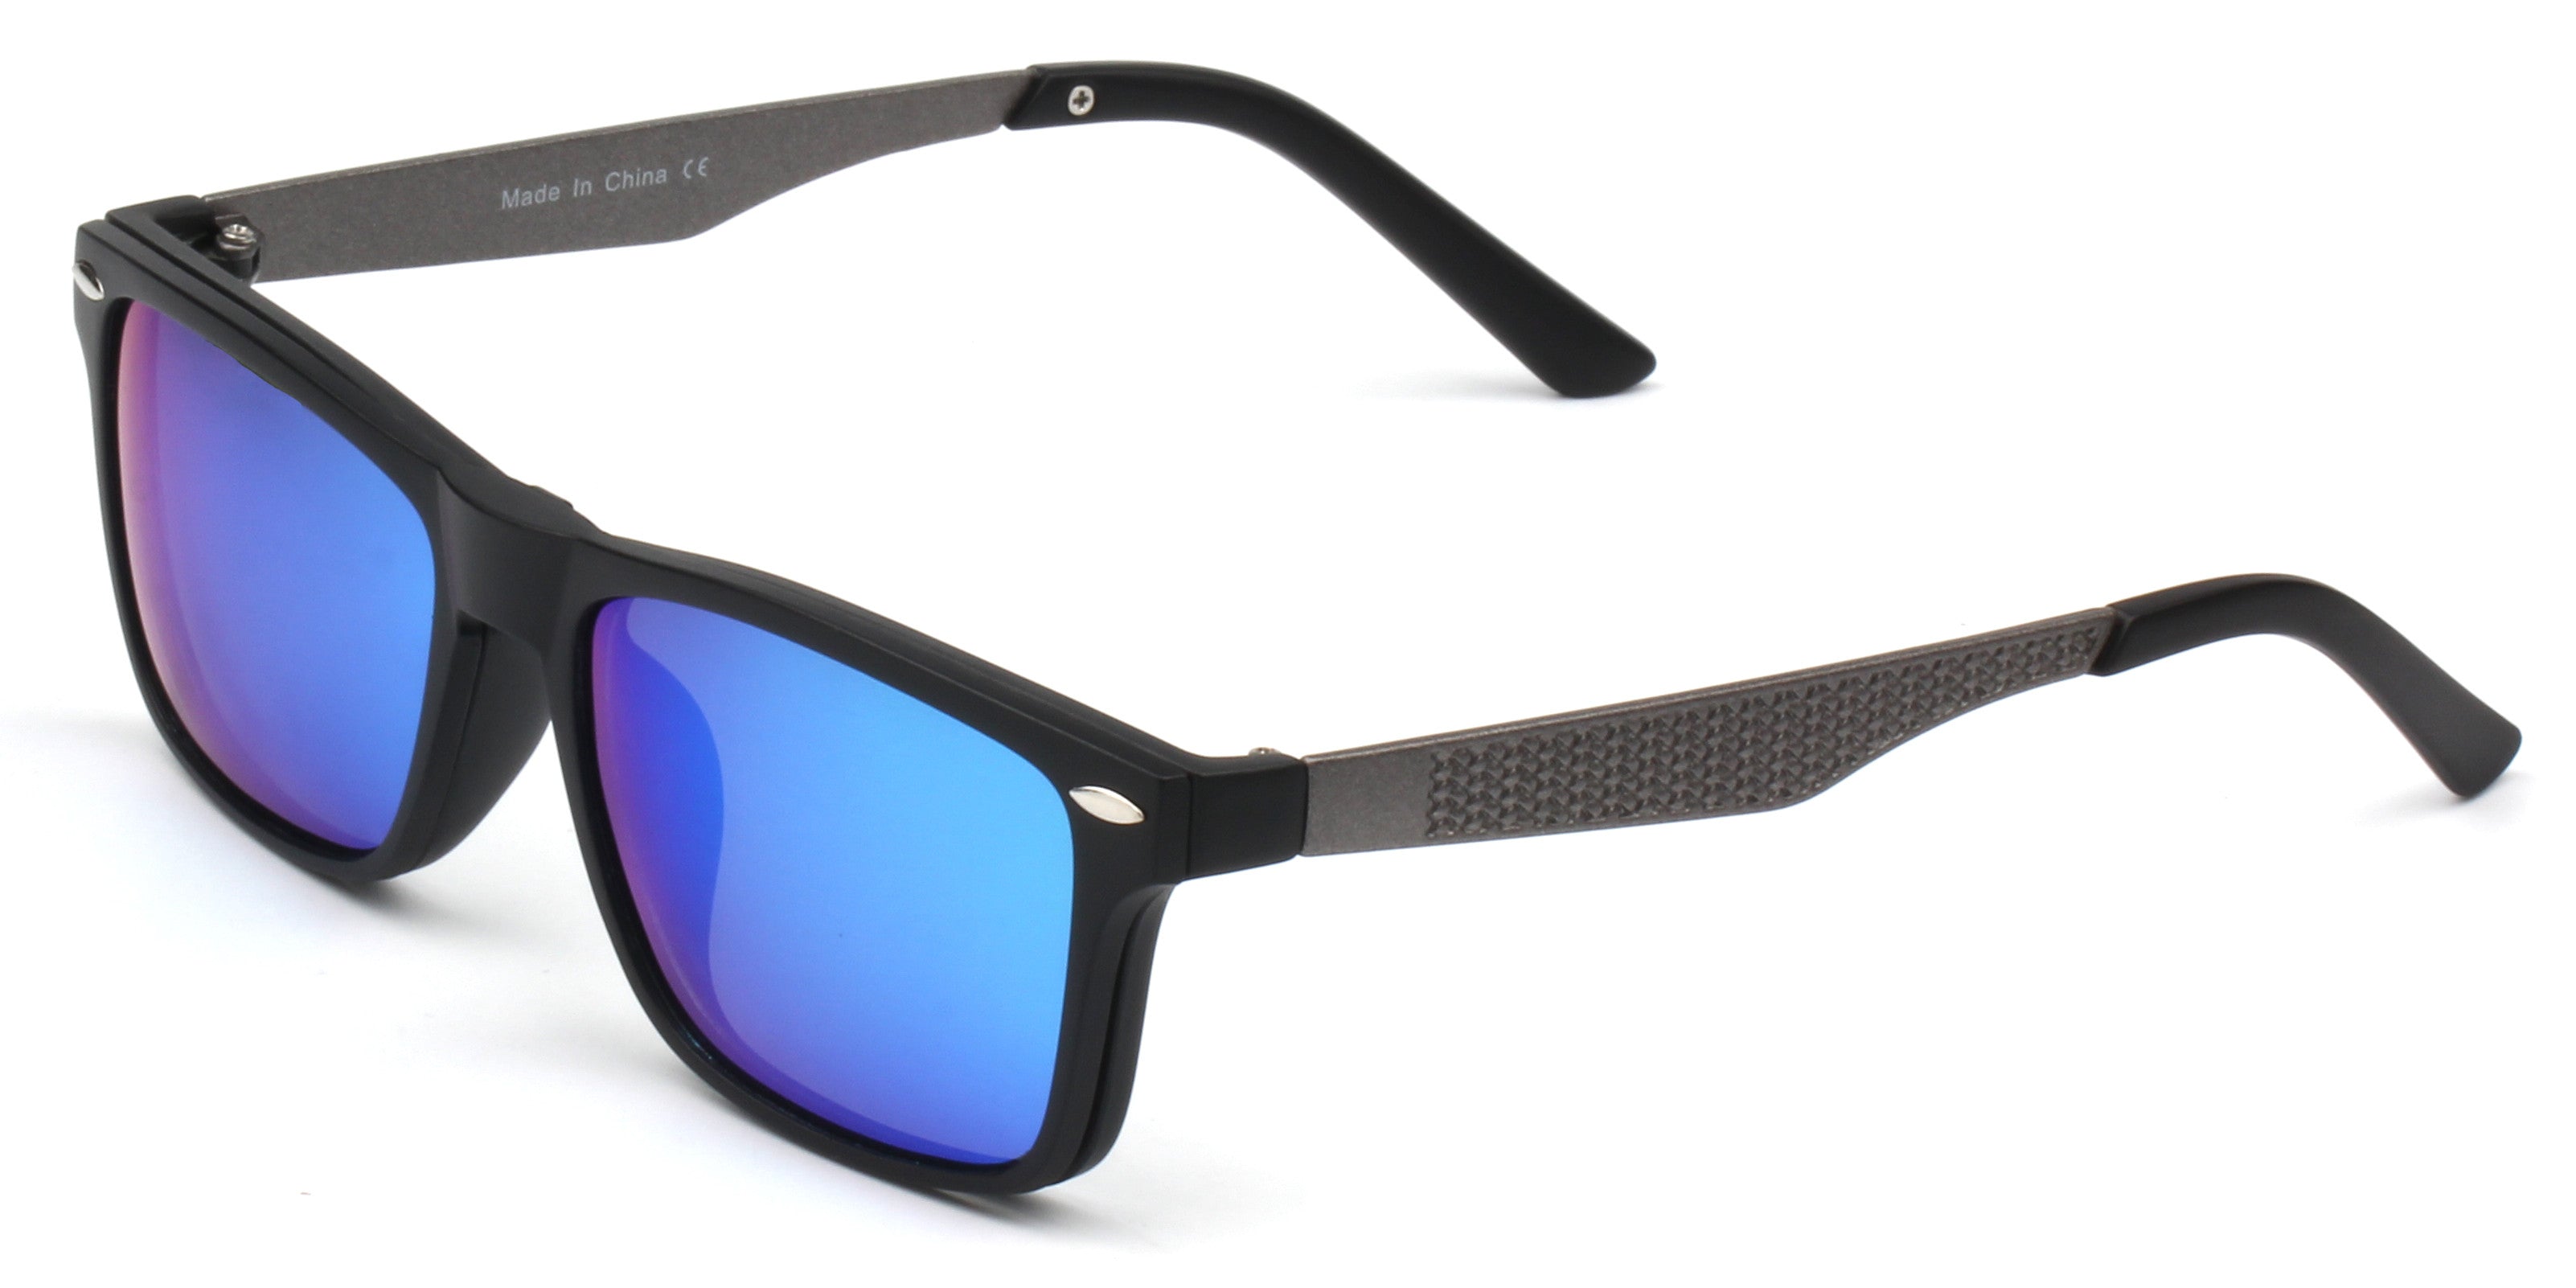 PS2016 - Polarized Clip-On Lens Rectangular Mirrored Fashion Sunglasses Purple coating lens